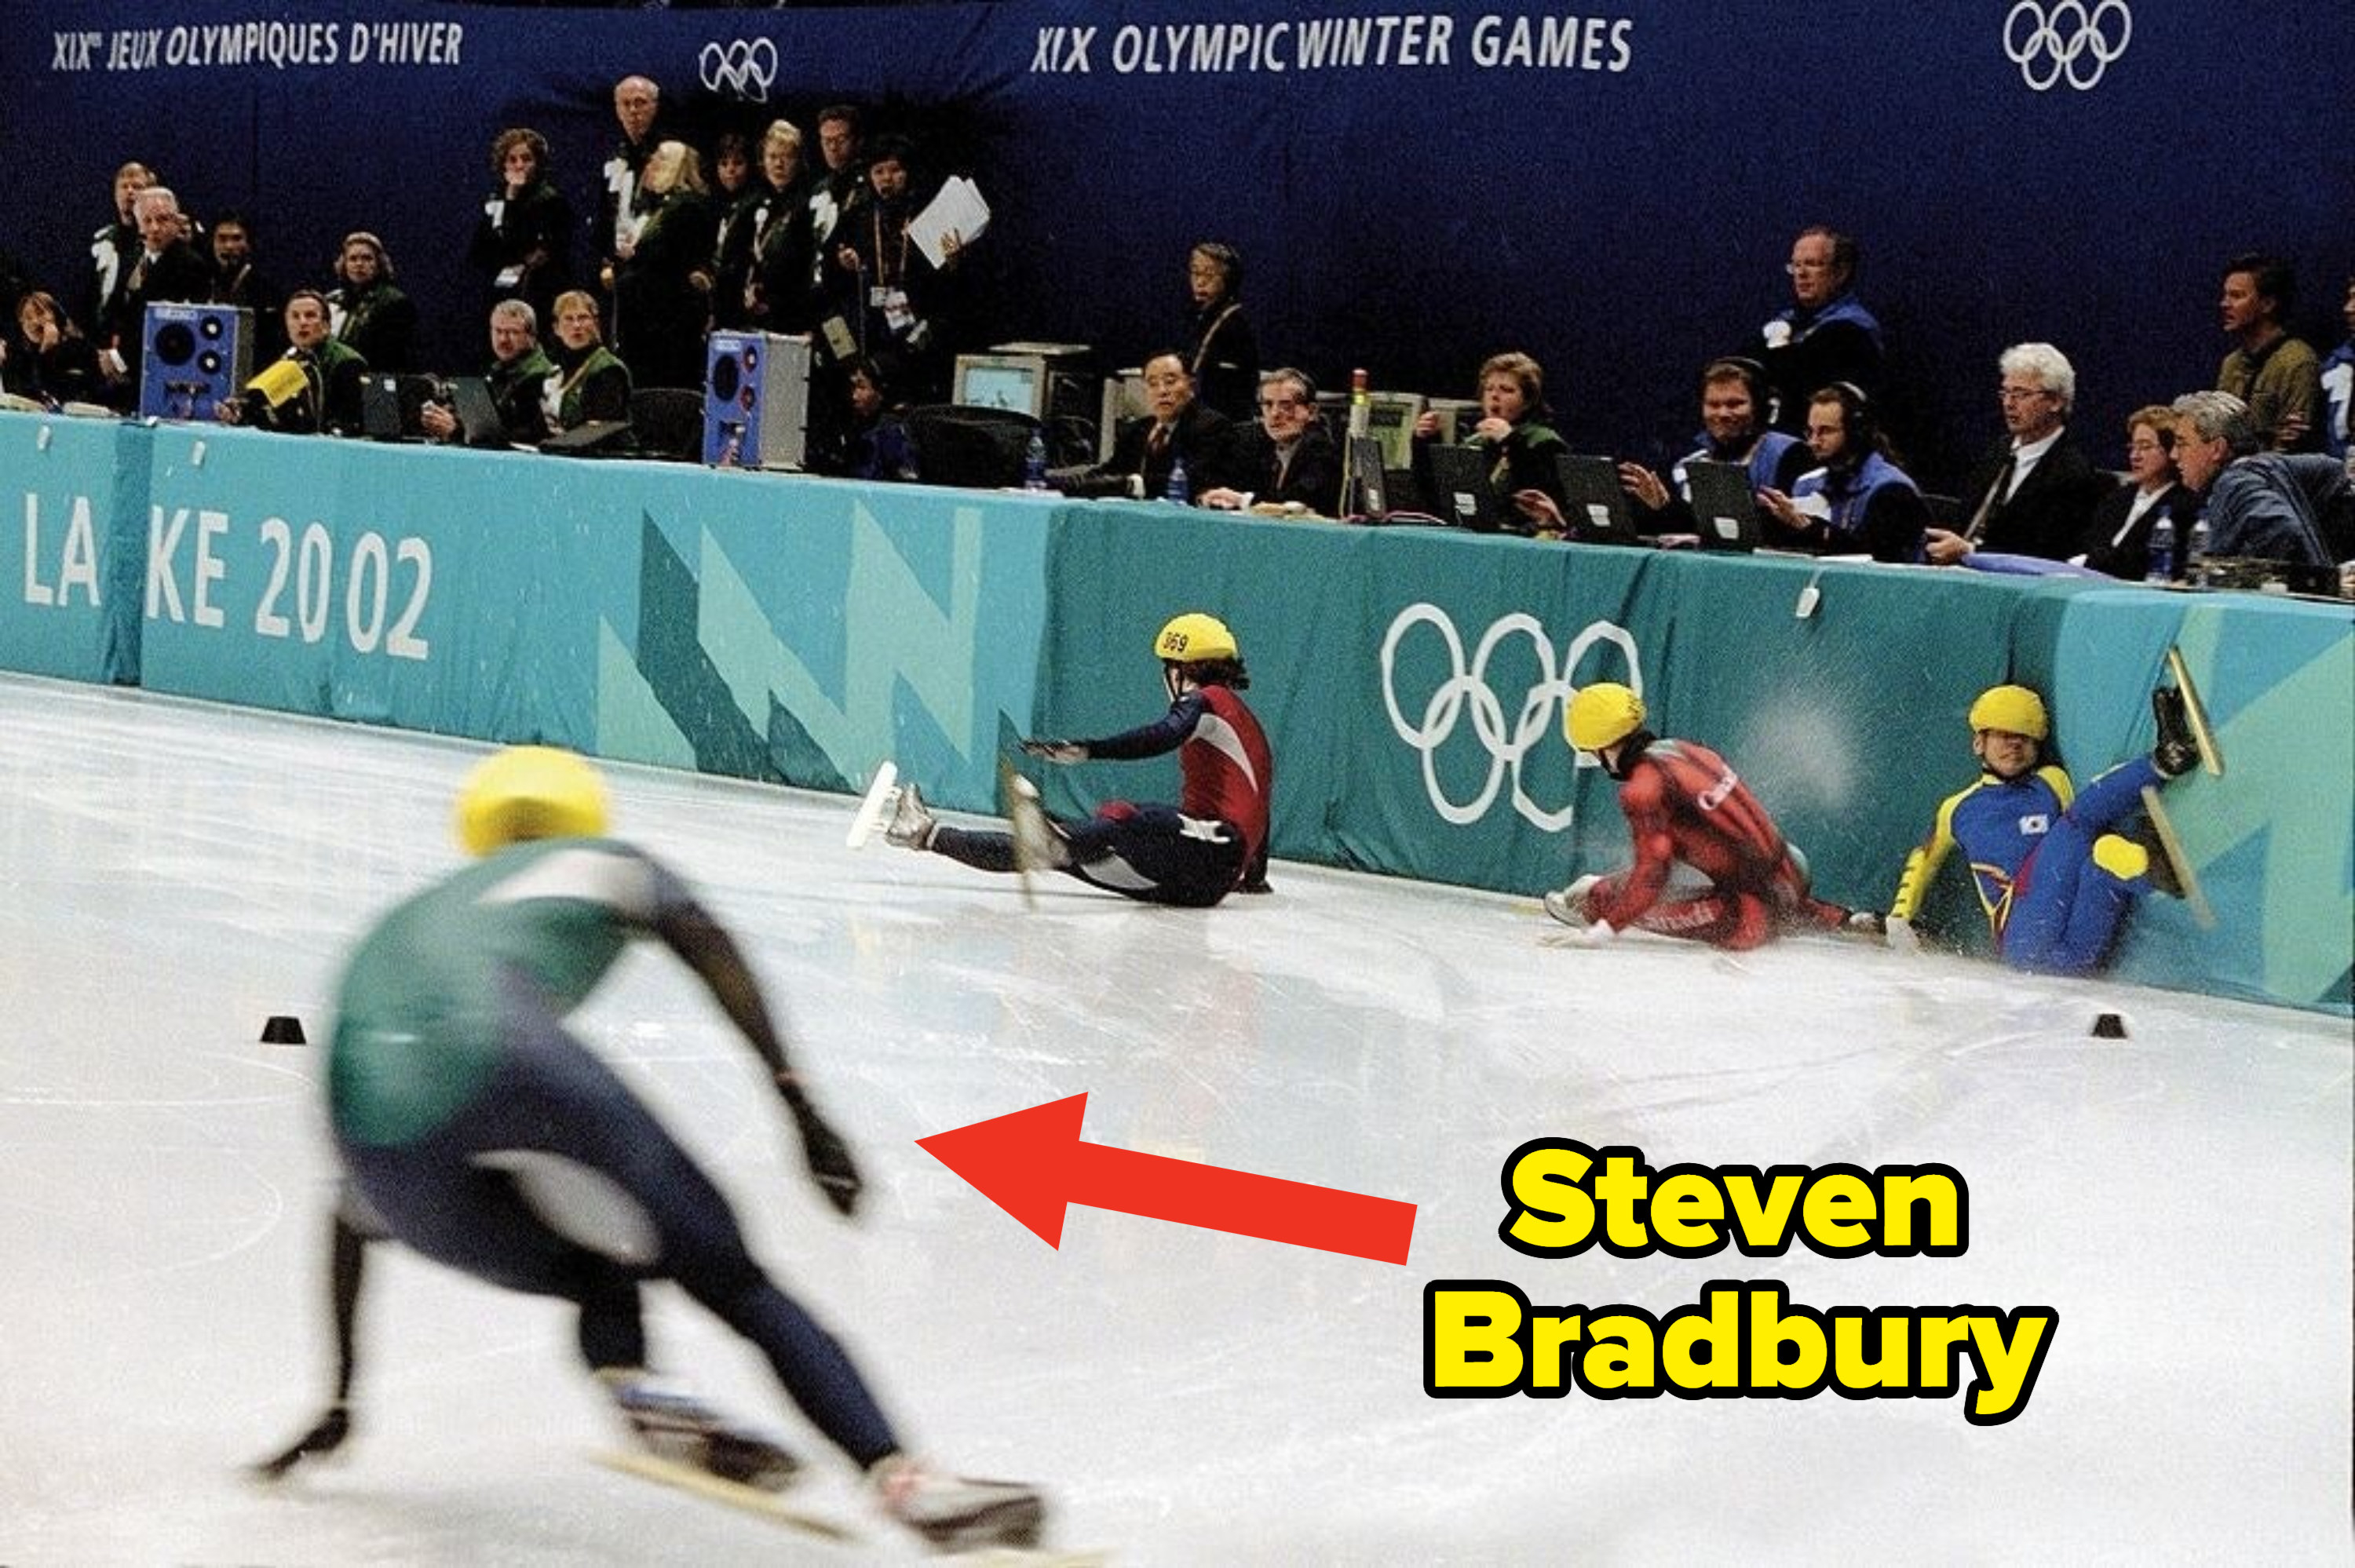 Steven Bradbury keeps skating